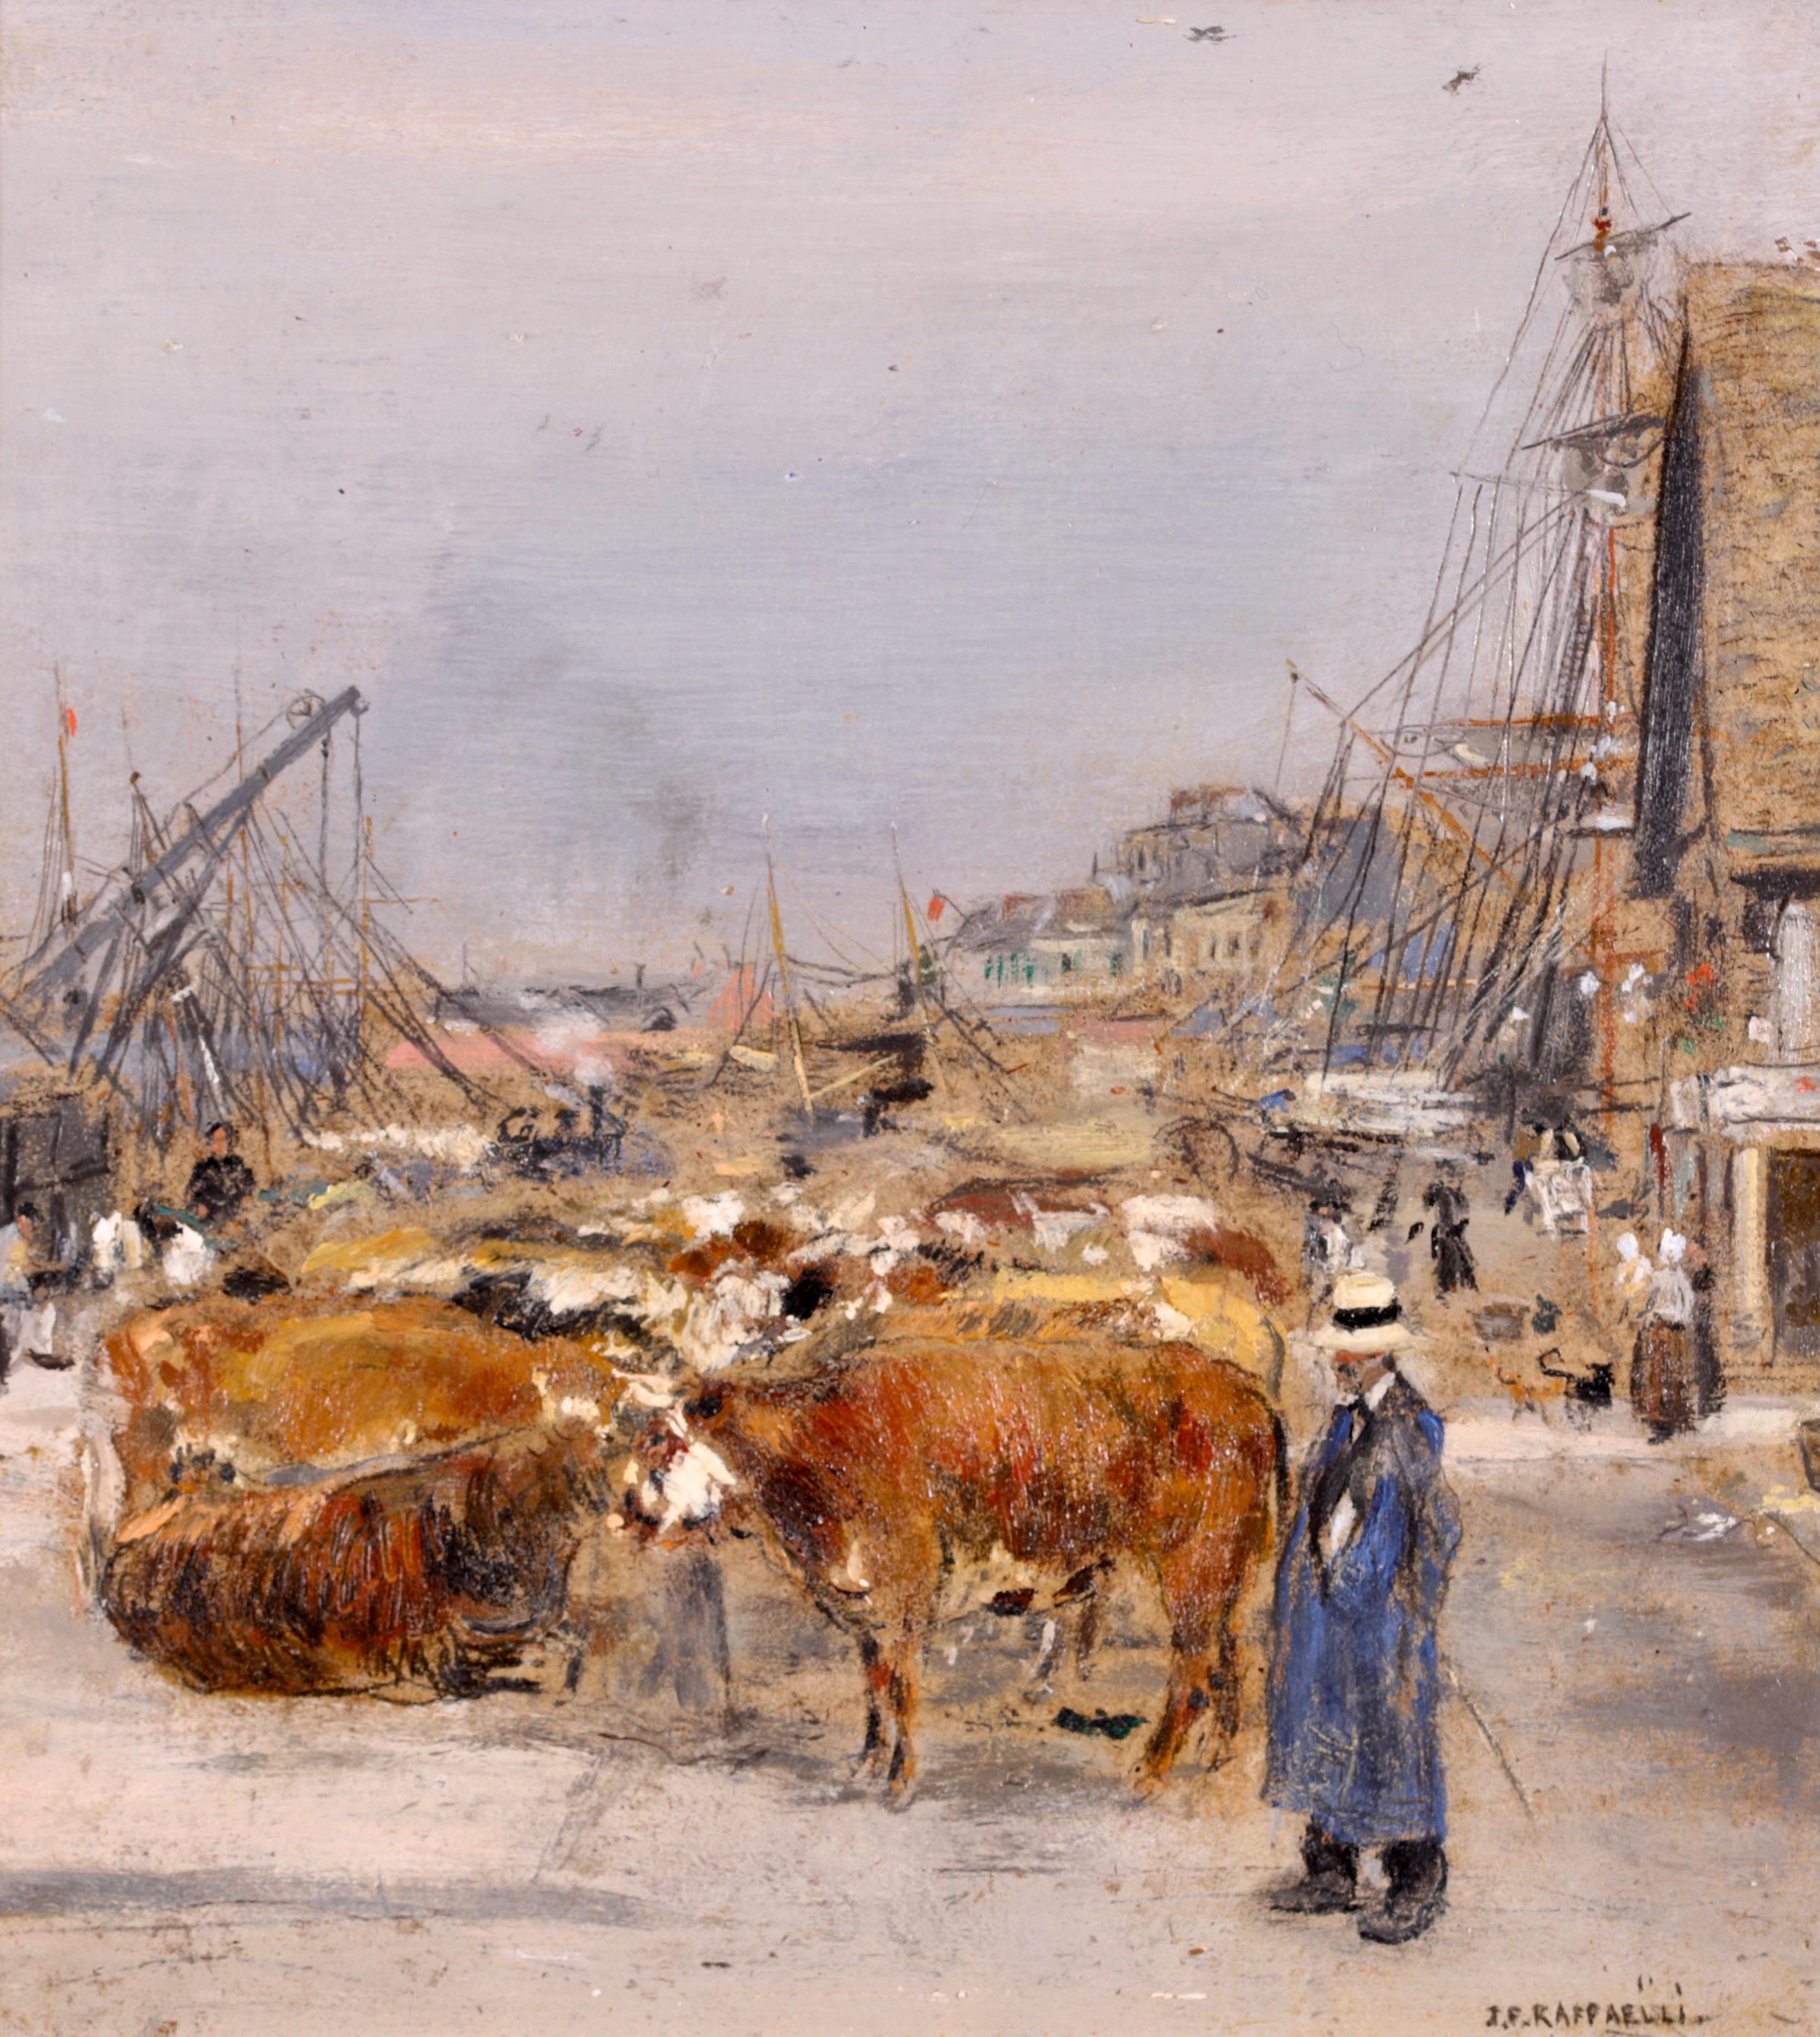  L'embarquement de boeufs - Impressionist Oil, Cattle by Jean Francois Raffaelli